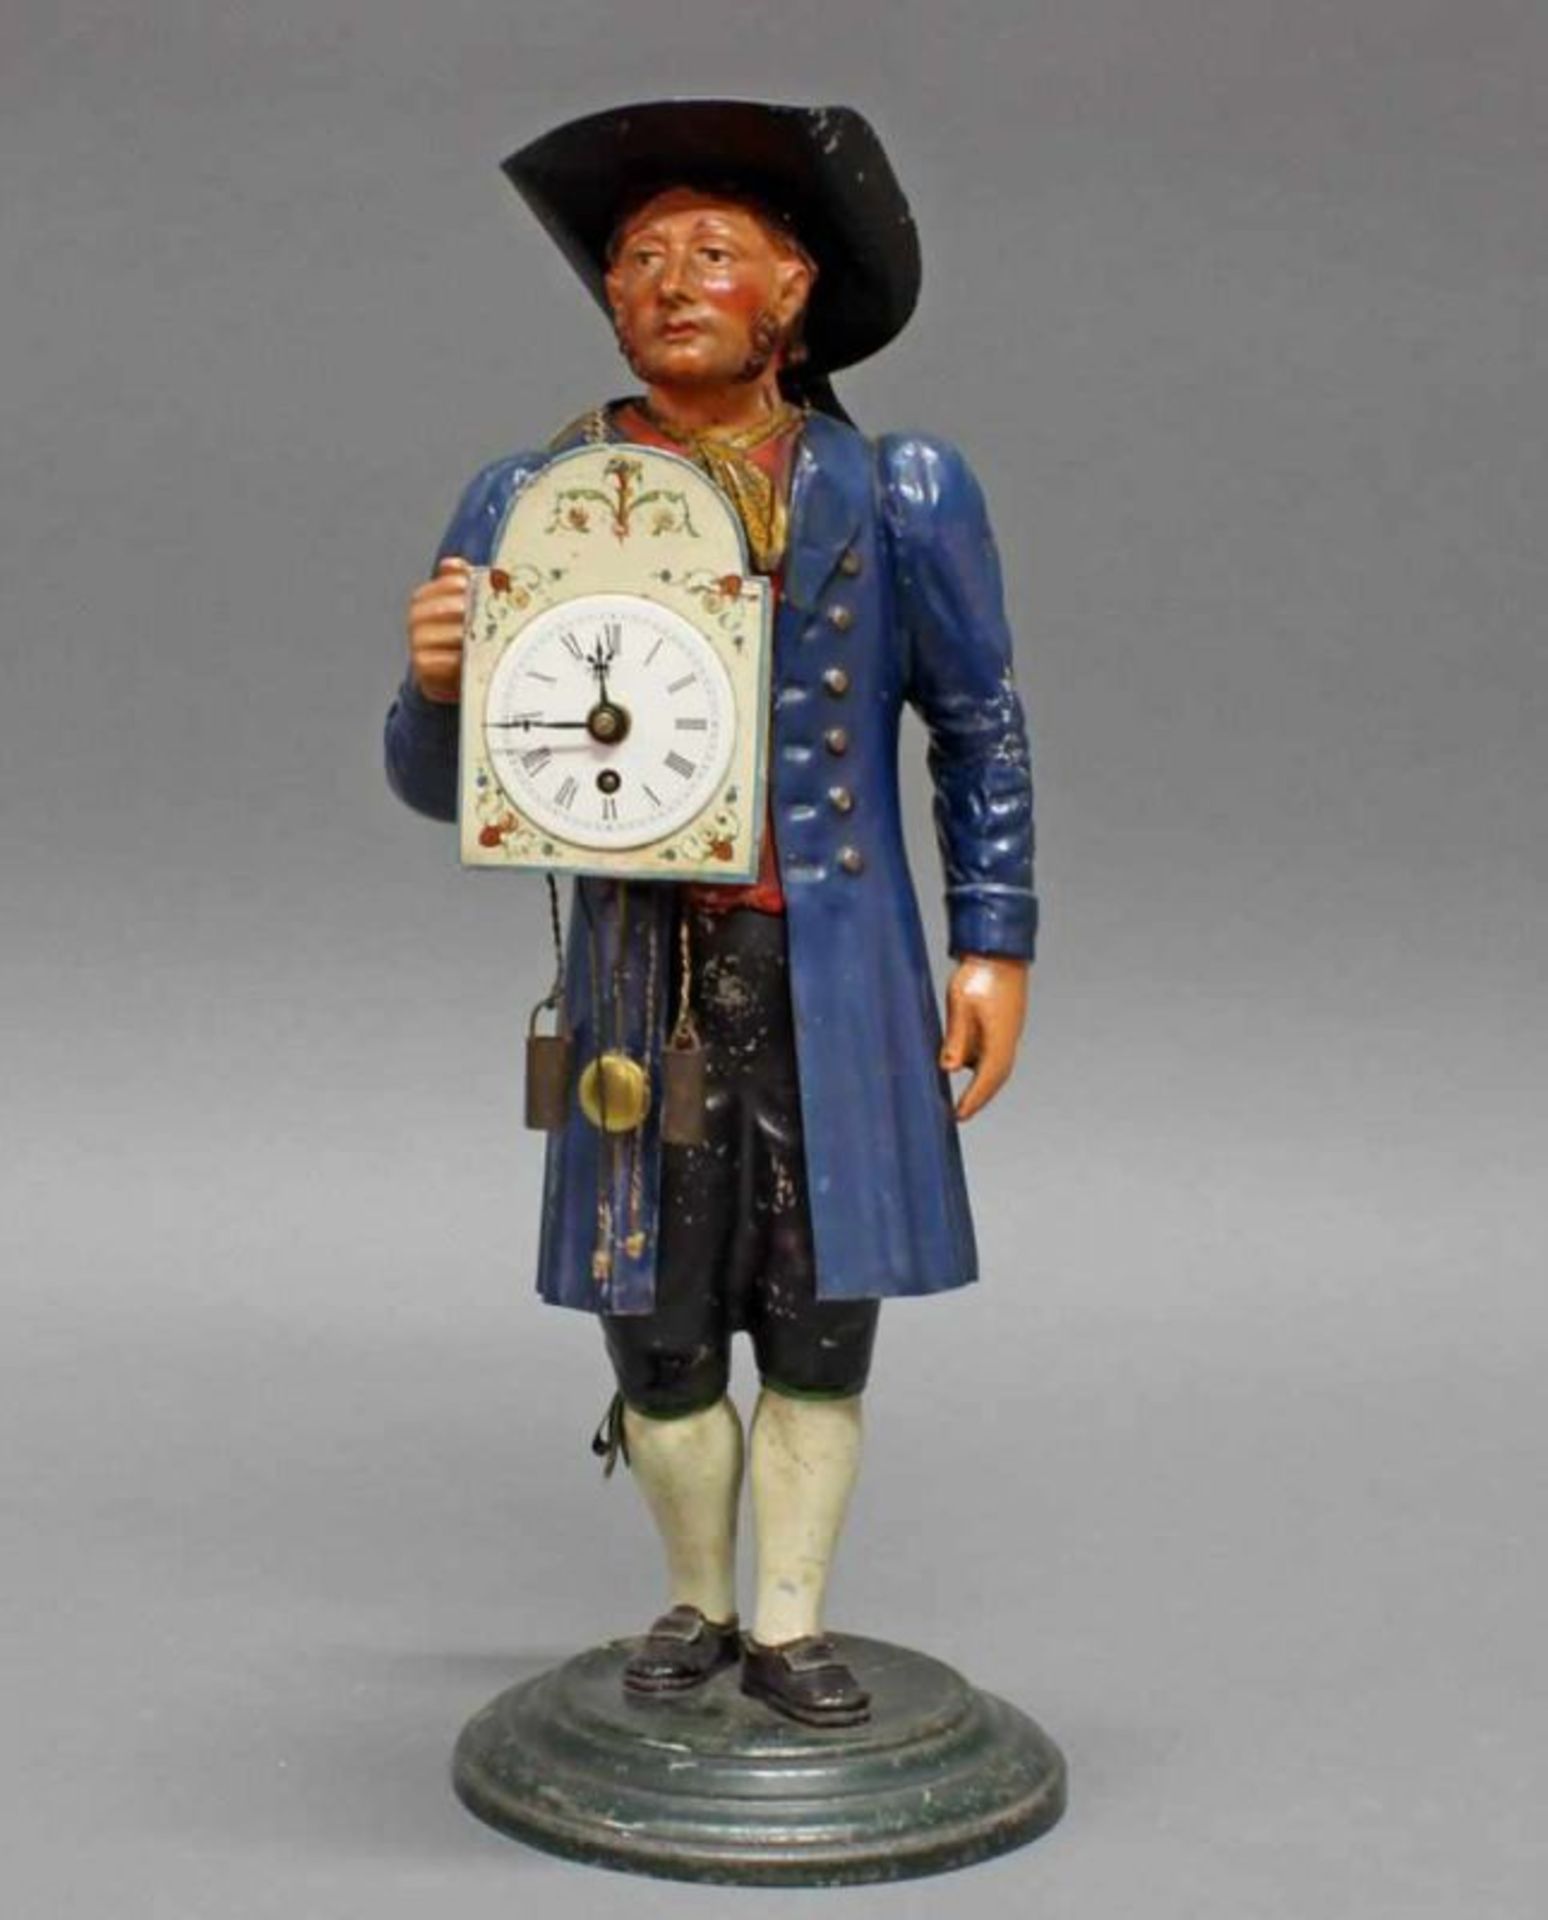 Figurenuhr, "Schwarzwälder Uhrenverkäufer", 19./20. Jh., Metallblech, polychrom, 36 cm hoch, stärker